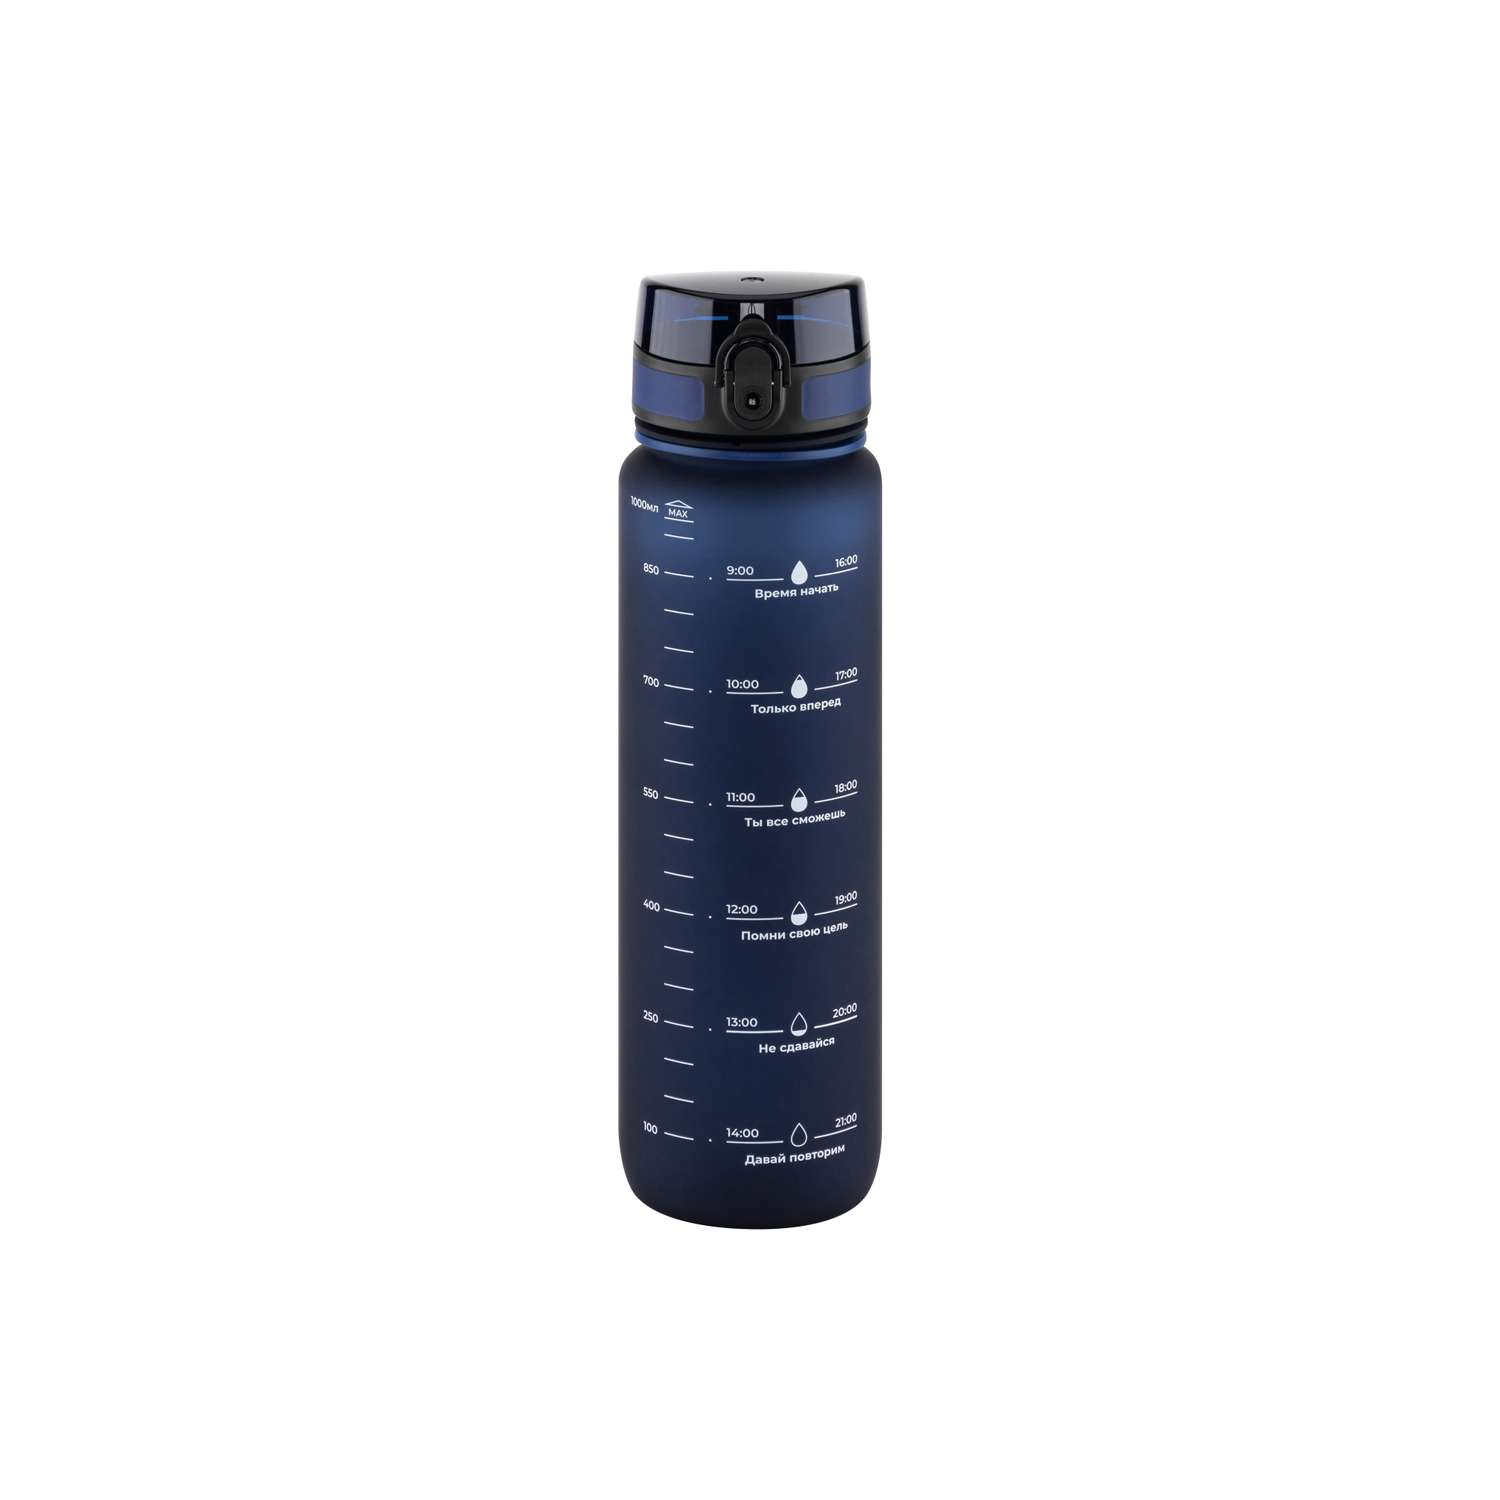 Бутылка спортивная для воды Elan Gallery 1000 мл 7.8х7.8х28.5 см Style Matte темно-синяя мотивационная - фото 5